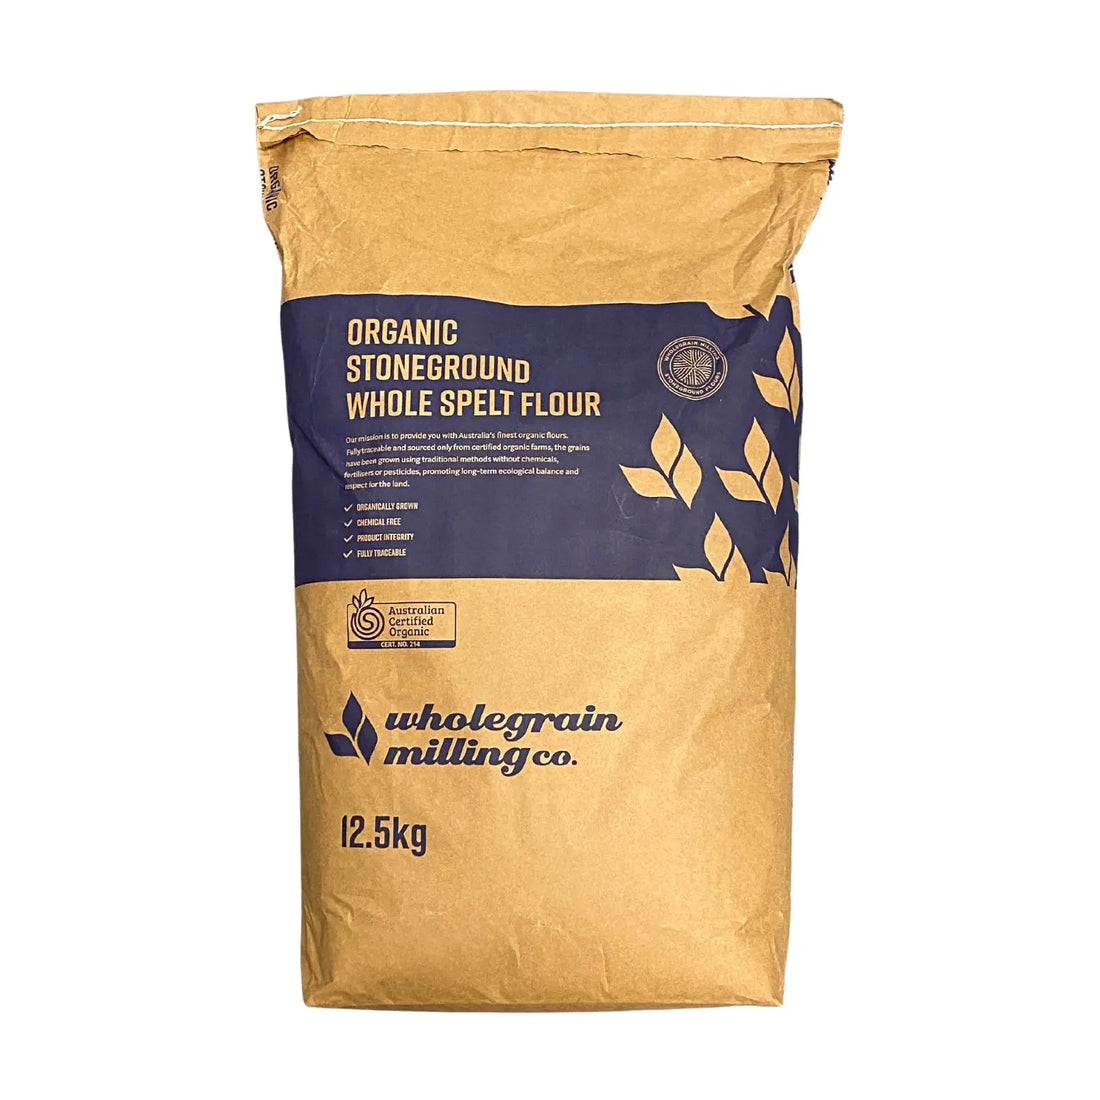 Spelt Flour Whole Stoneground Organic 12.5kg-Flour & Baking-Wholegrain Milling Co-Sovereign Foods-Organic-Flour-Bulk-Sourdough-Breadmaking